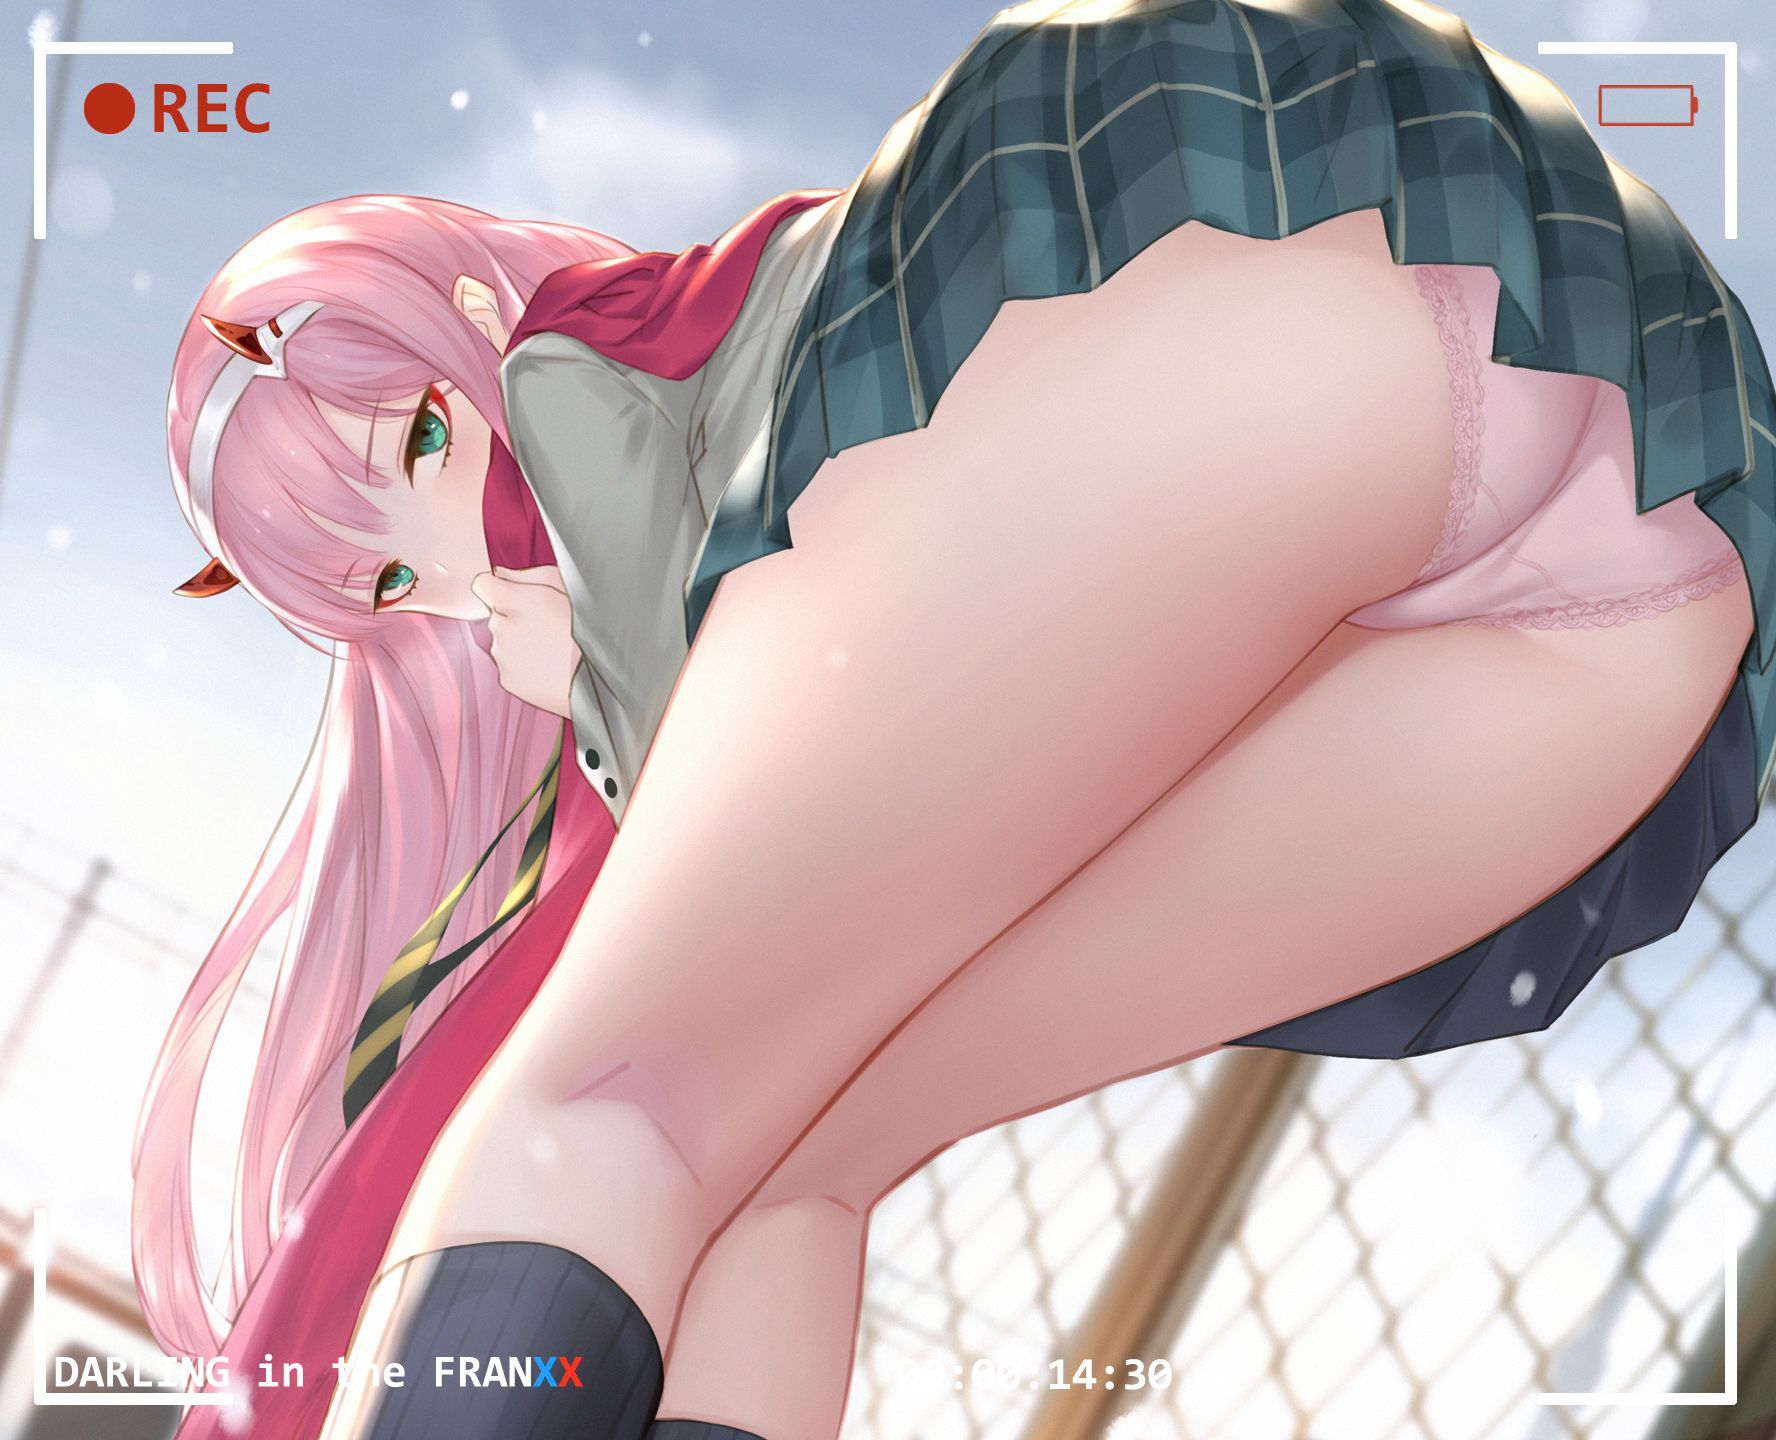 Erotic images of beautiful girls in student uniforms [Blazer Sailor] 2